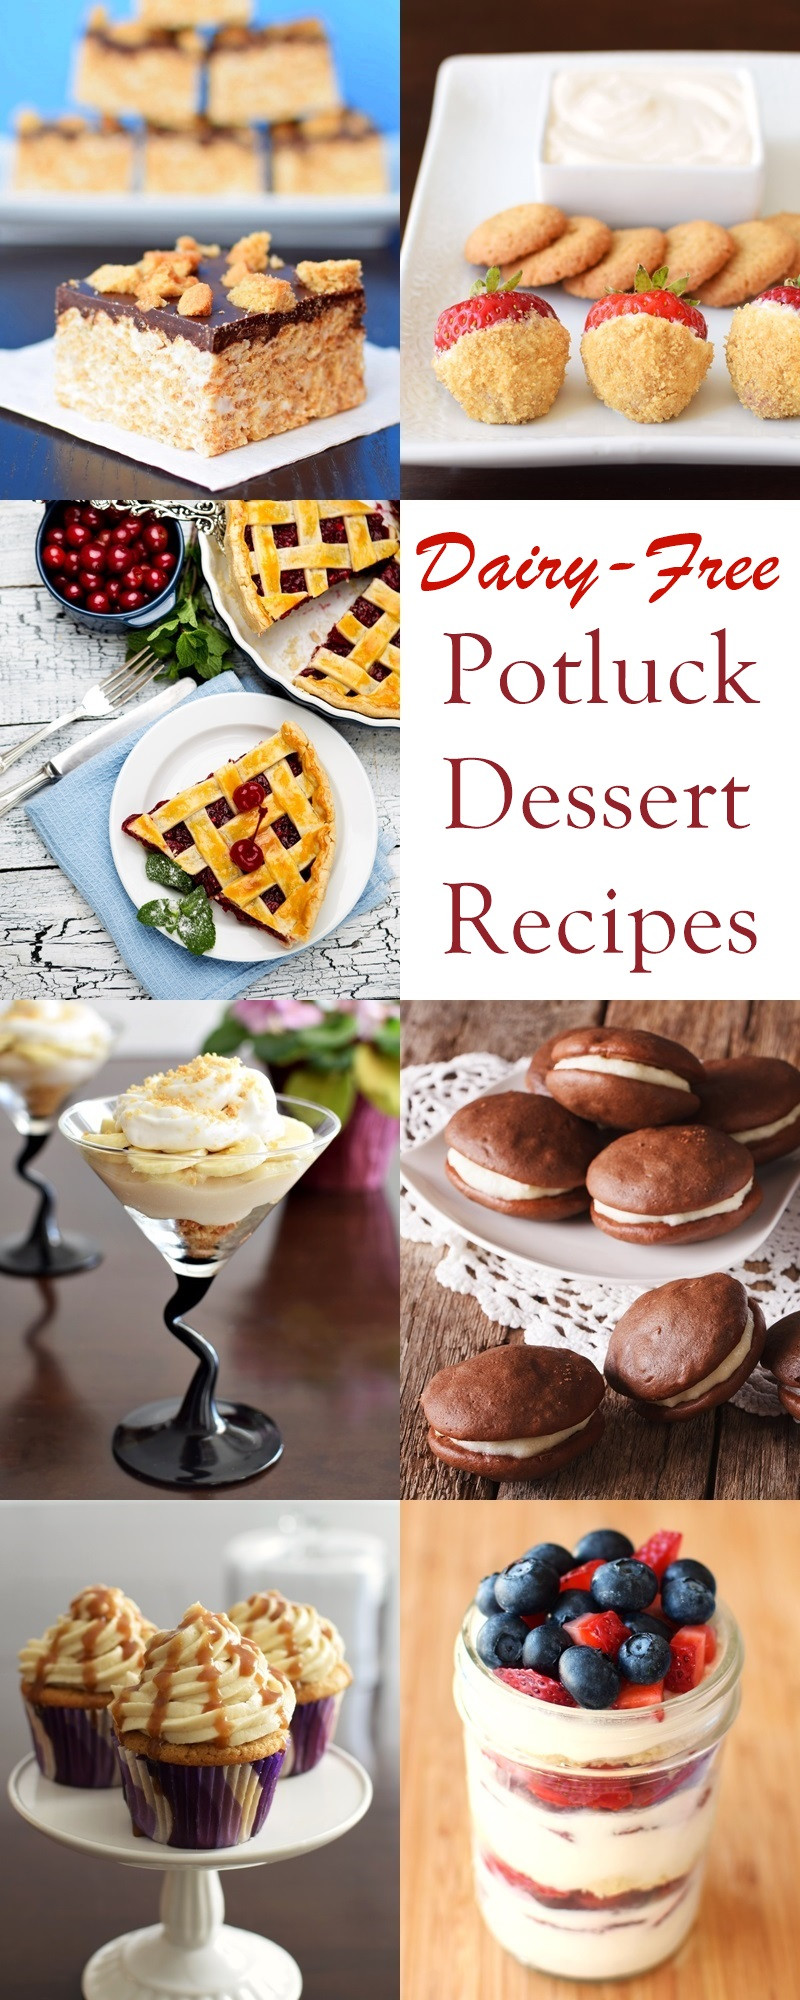 Nut Free Desserts
 22 Dairy Free Potluck Dessert Recipes Everyone Will Love